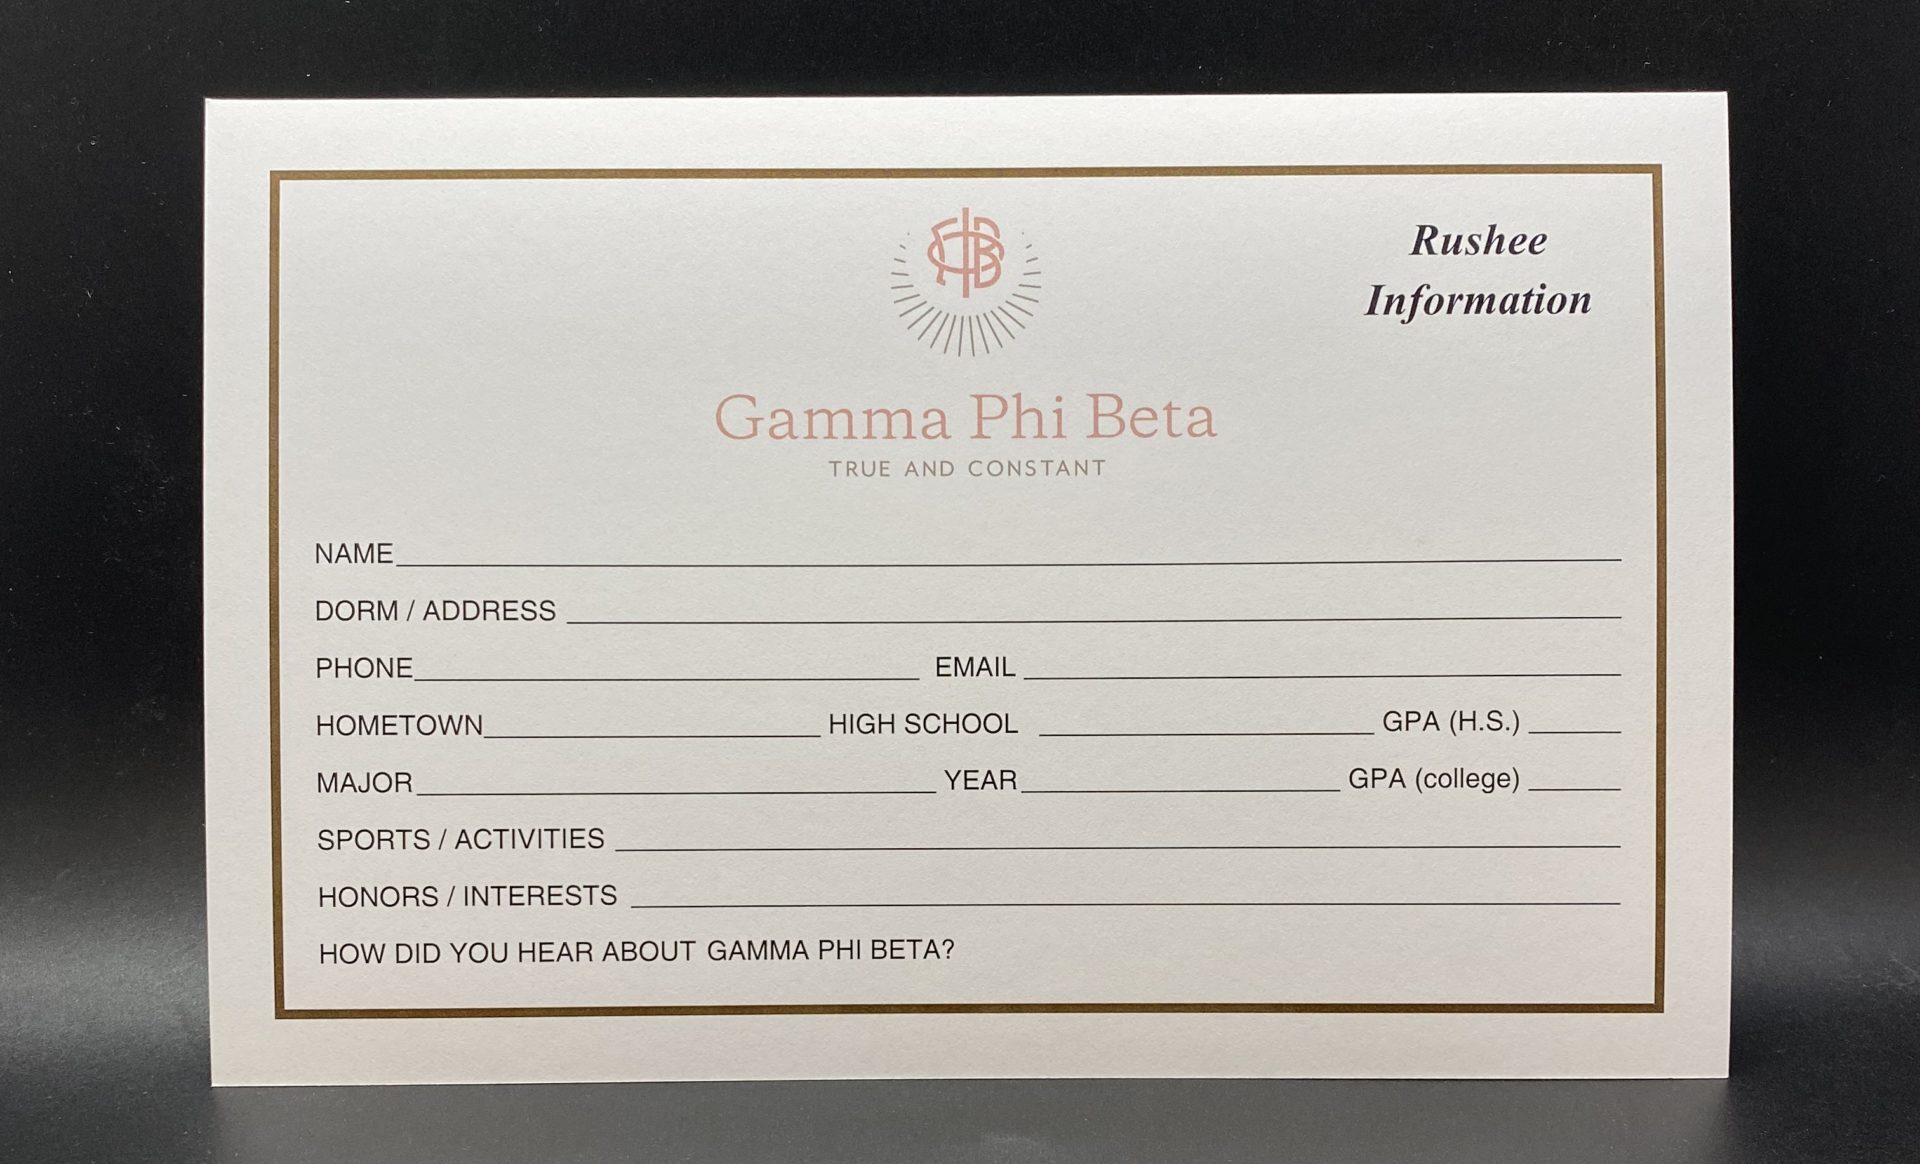 Rushee Information Cards Gamma Phi Beta